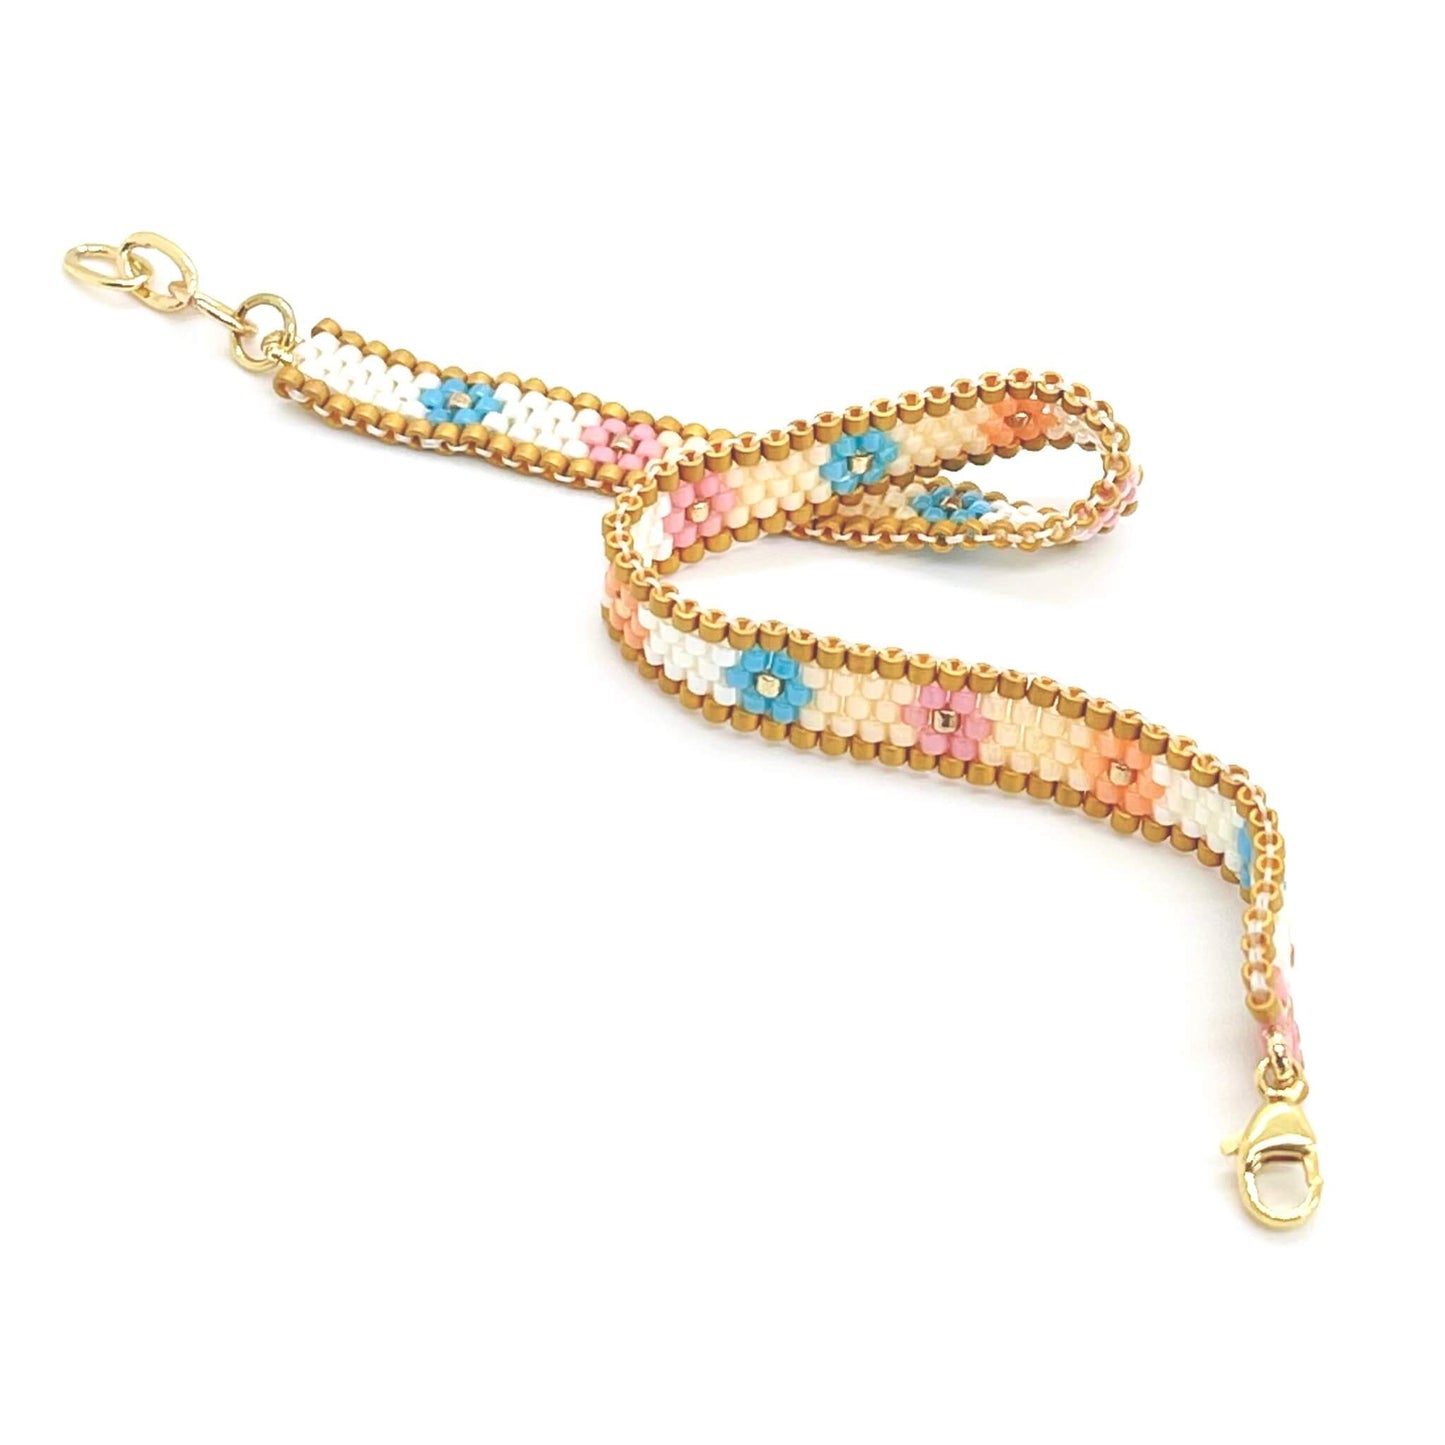 Beaded Daisy Flower Bracelet (rainbow - blue, red, orange, yellow, aqua,  gold)